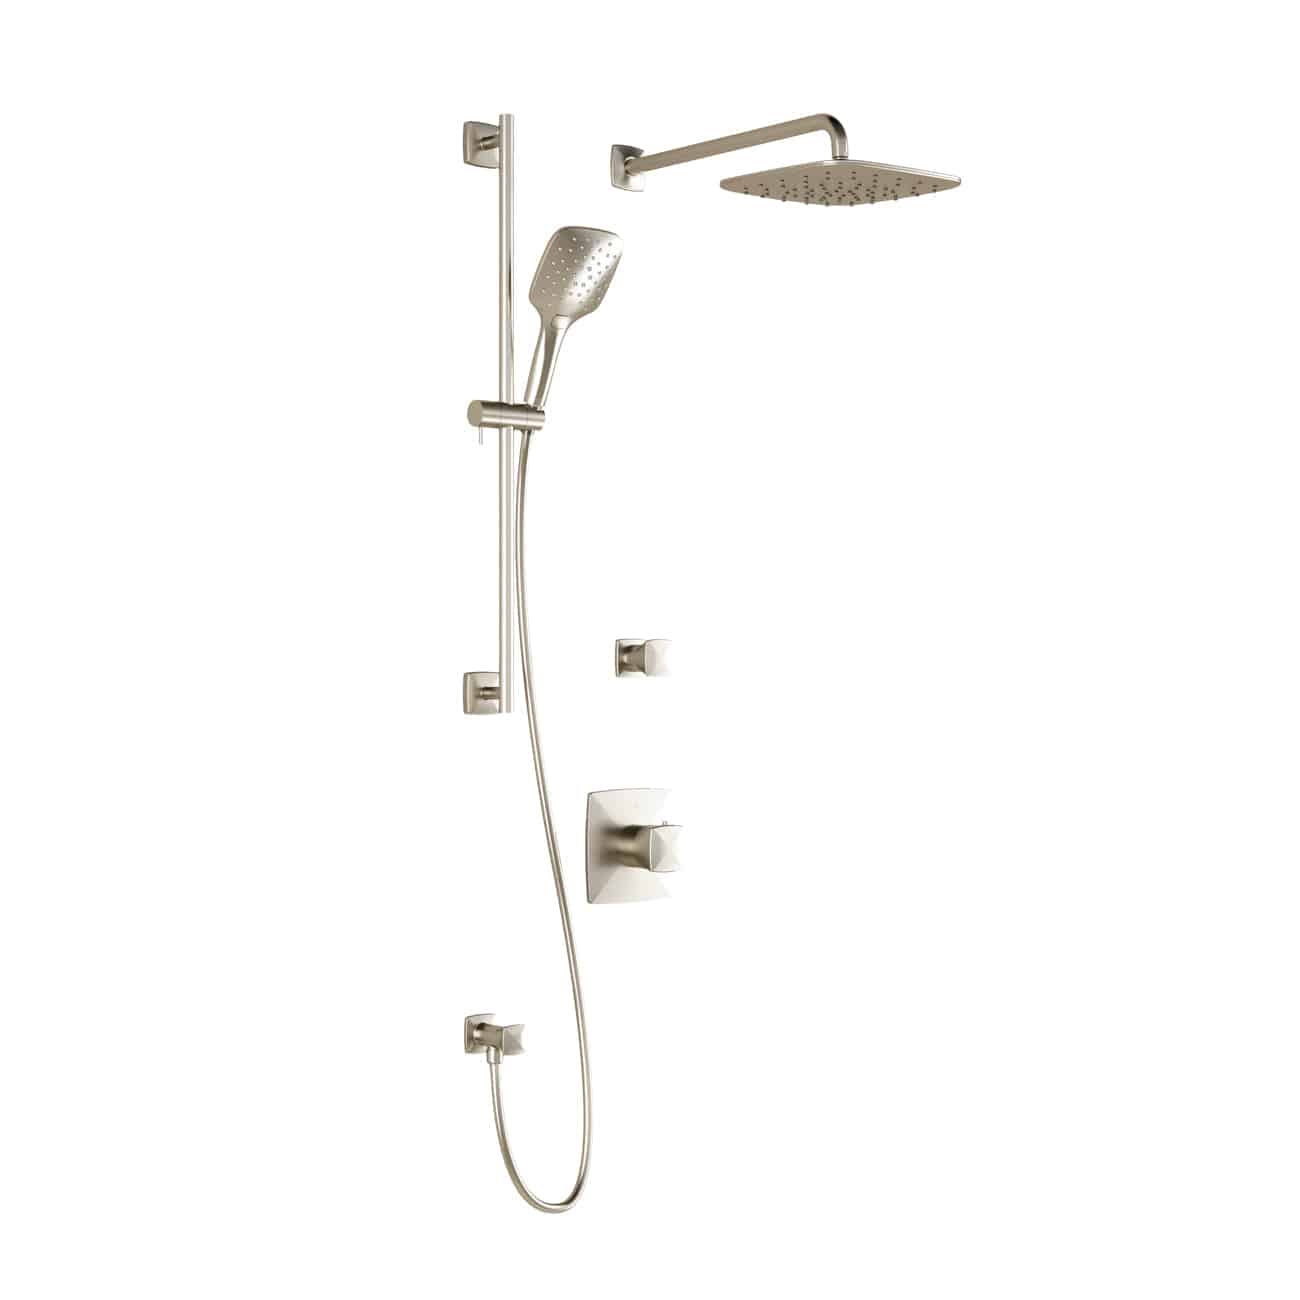 Kalia UMANI T2 PLUS AQUATONIK T/P Shower System with Wall Arm and 10" Rain Shower Head- Brushed Nickel PVD